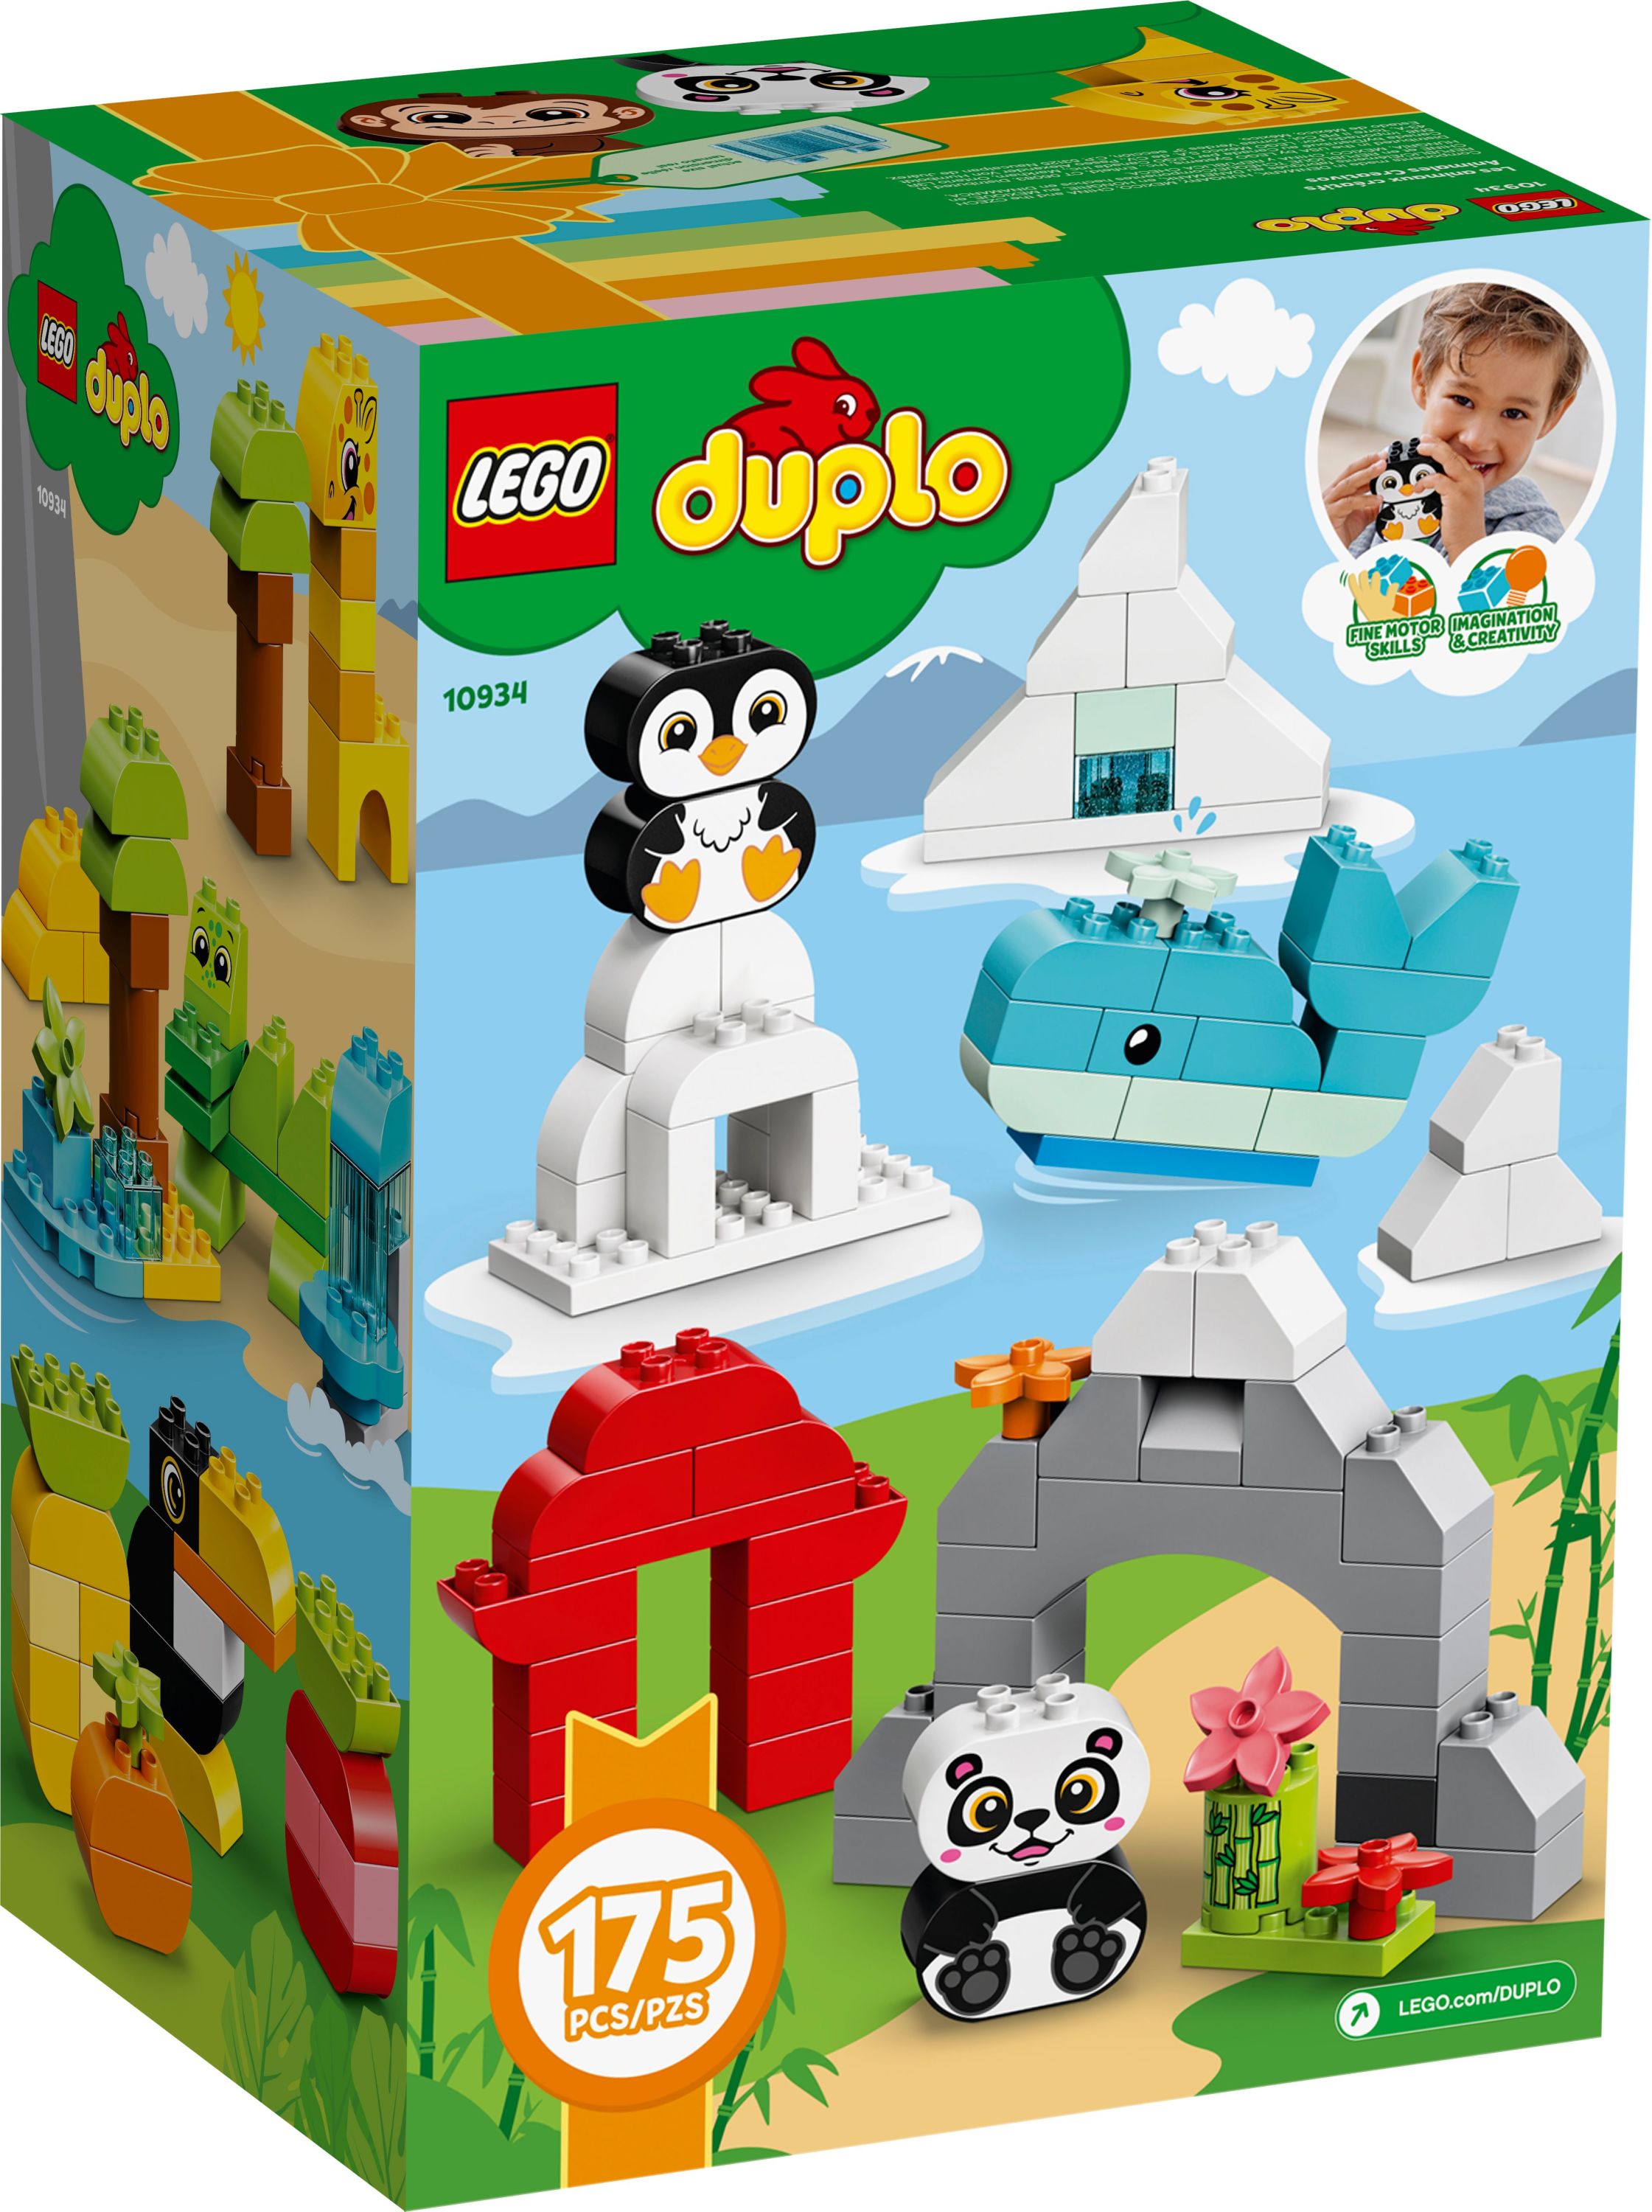 LEGO DUPLO Classic Creative Animals 10934 Building Toy Set (175 Pieces) - image 5 of 7